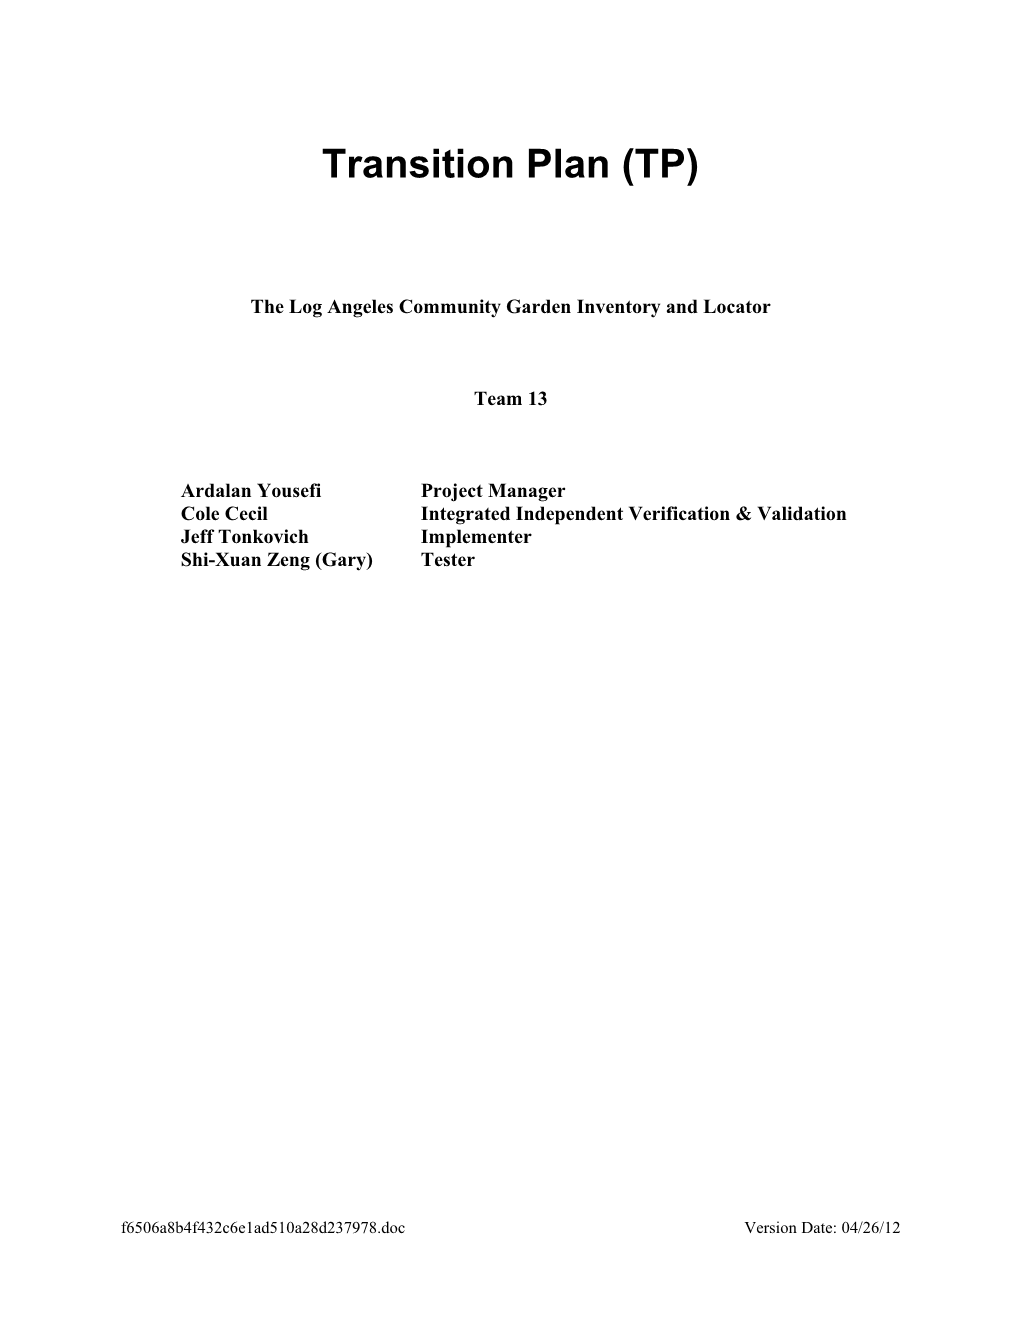 Transition Plan (TP) s2